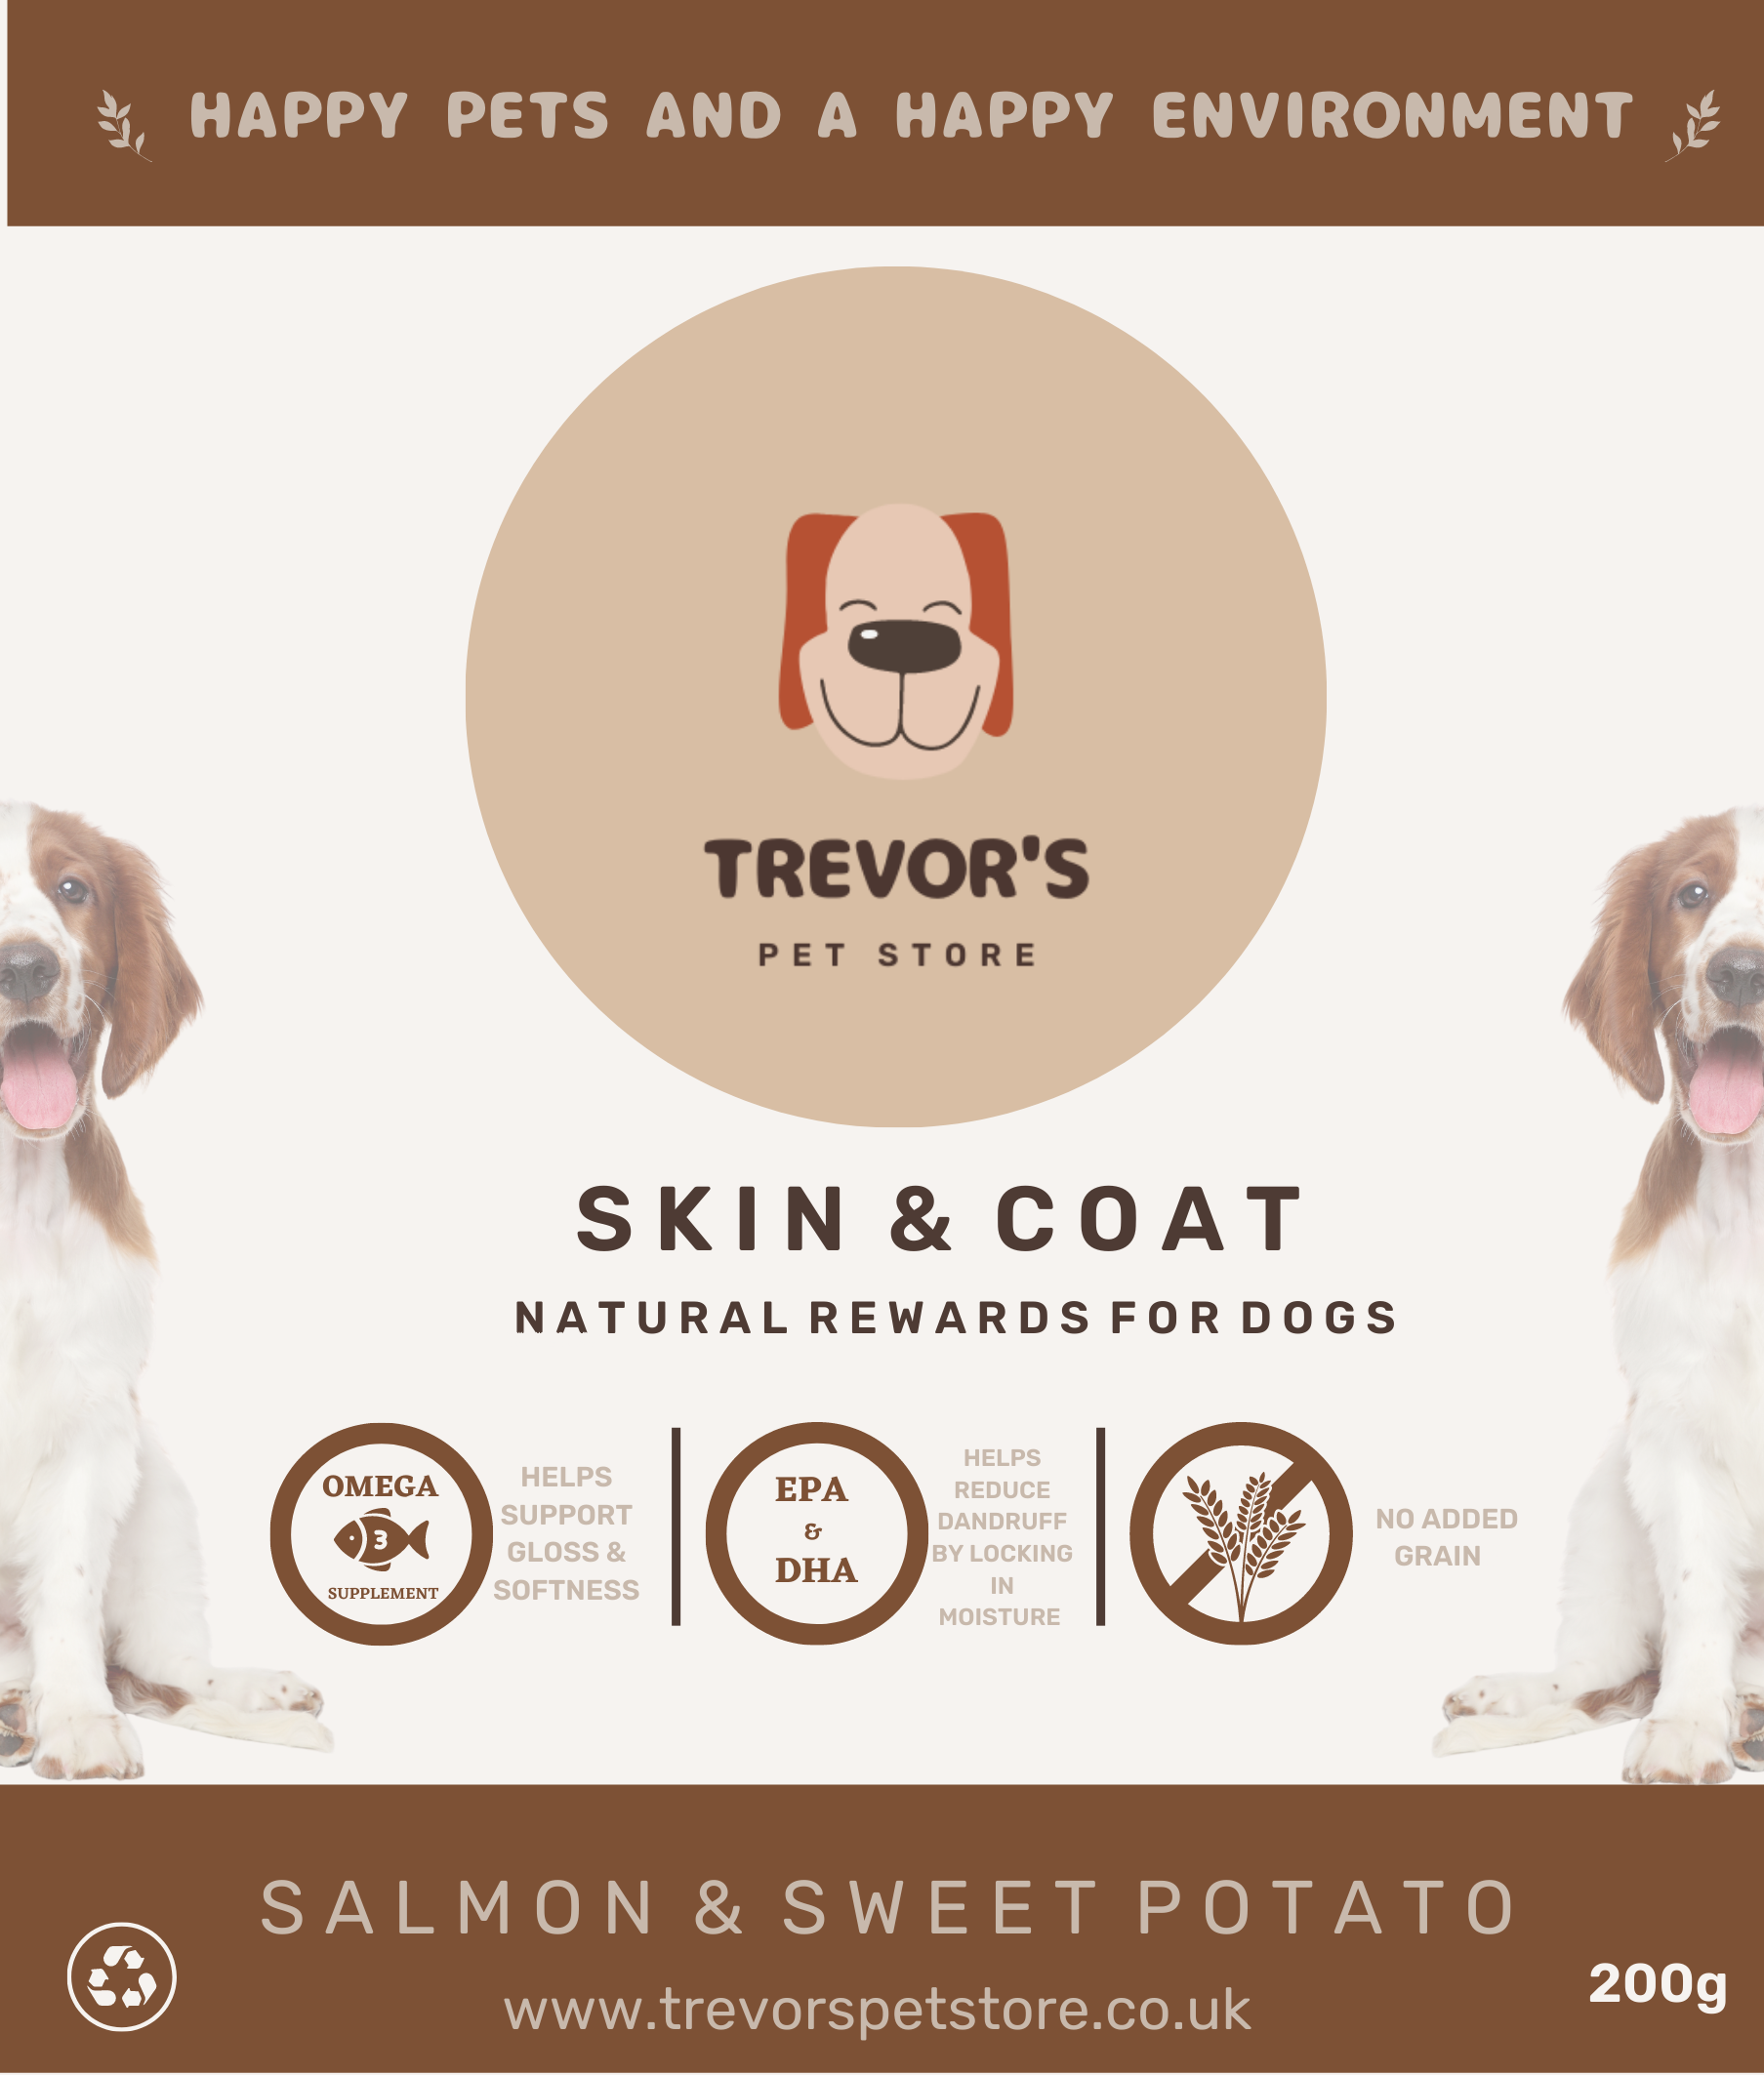 Trevor's Pet Store Skin & Coat Rewards - Salmon & Sweet Potato